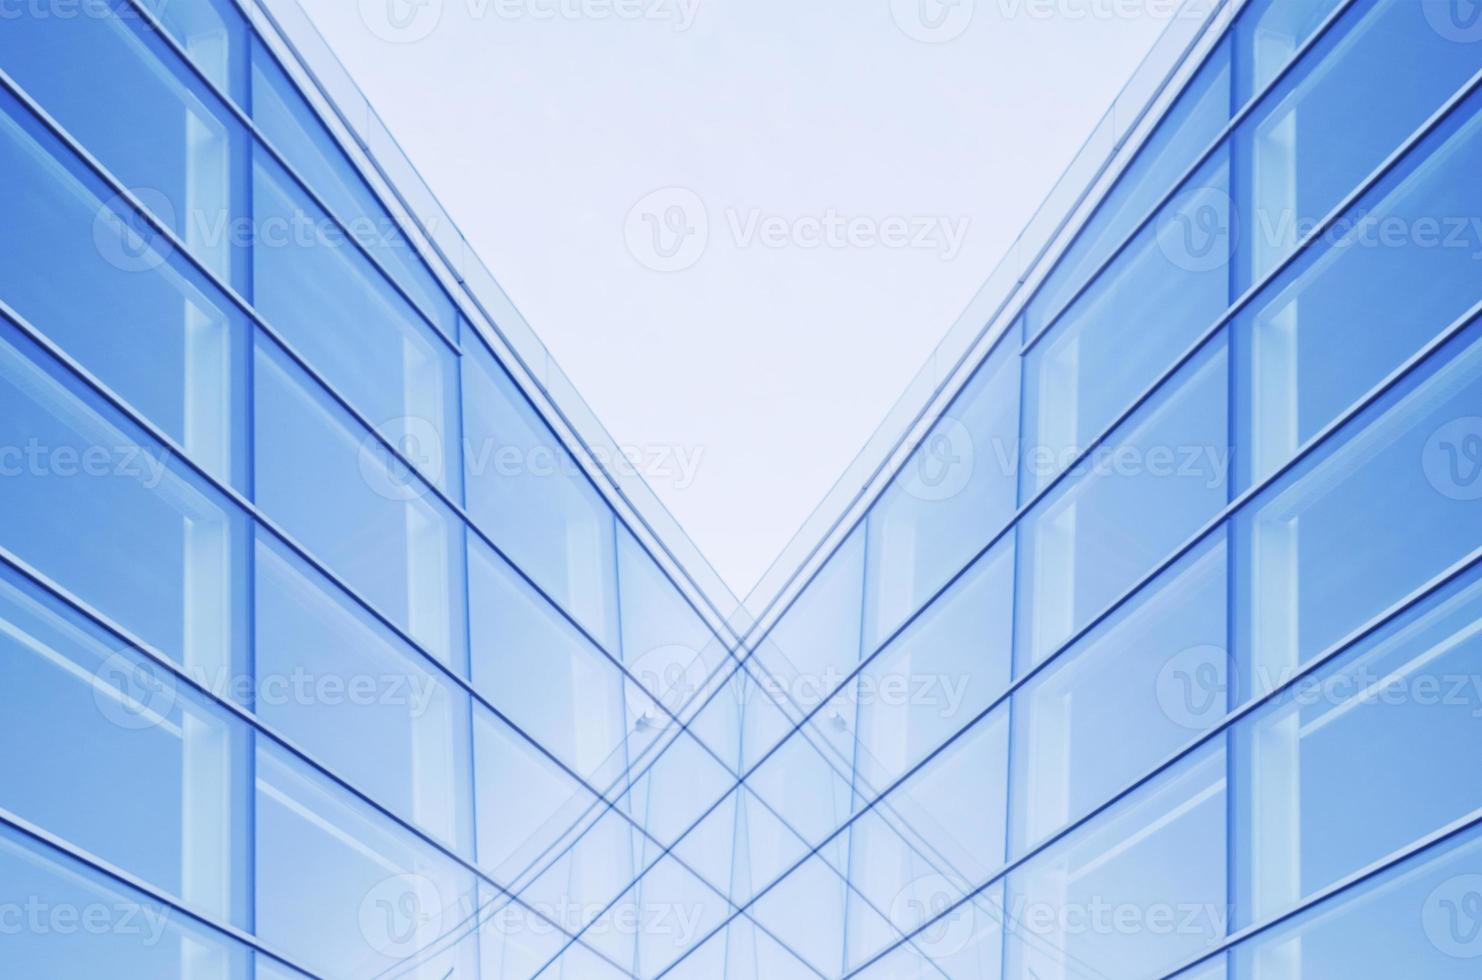 moderna architettura in vetro foto